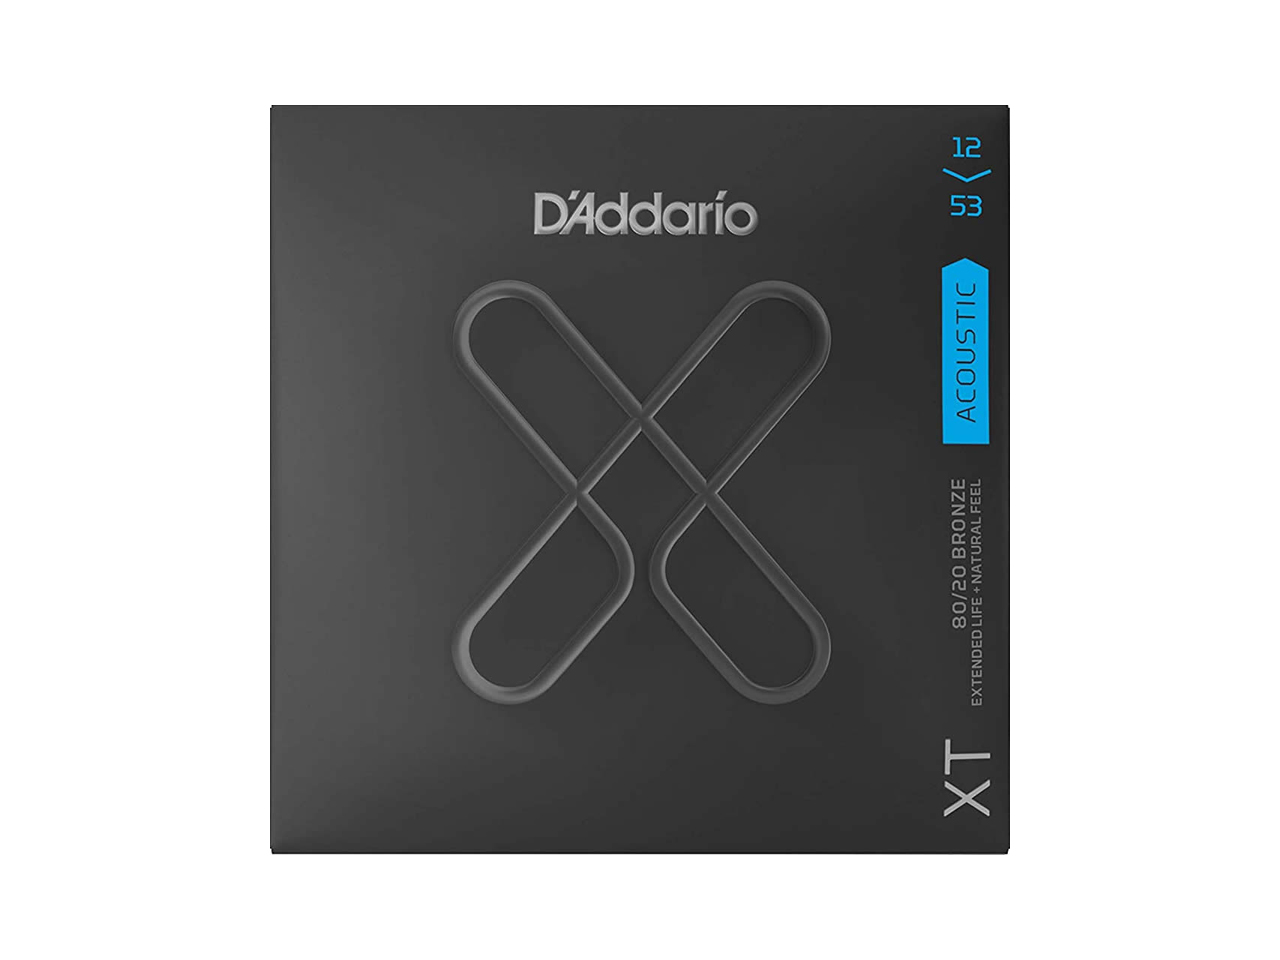 D'Addario(ダダリオ) XT ACOUSTIC 80/20 BRONZE, LIGHT / XTABR1253(アコースティックギター弦)